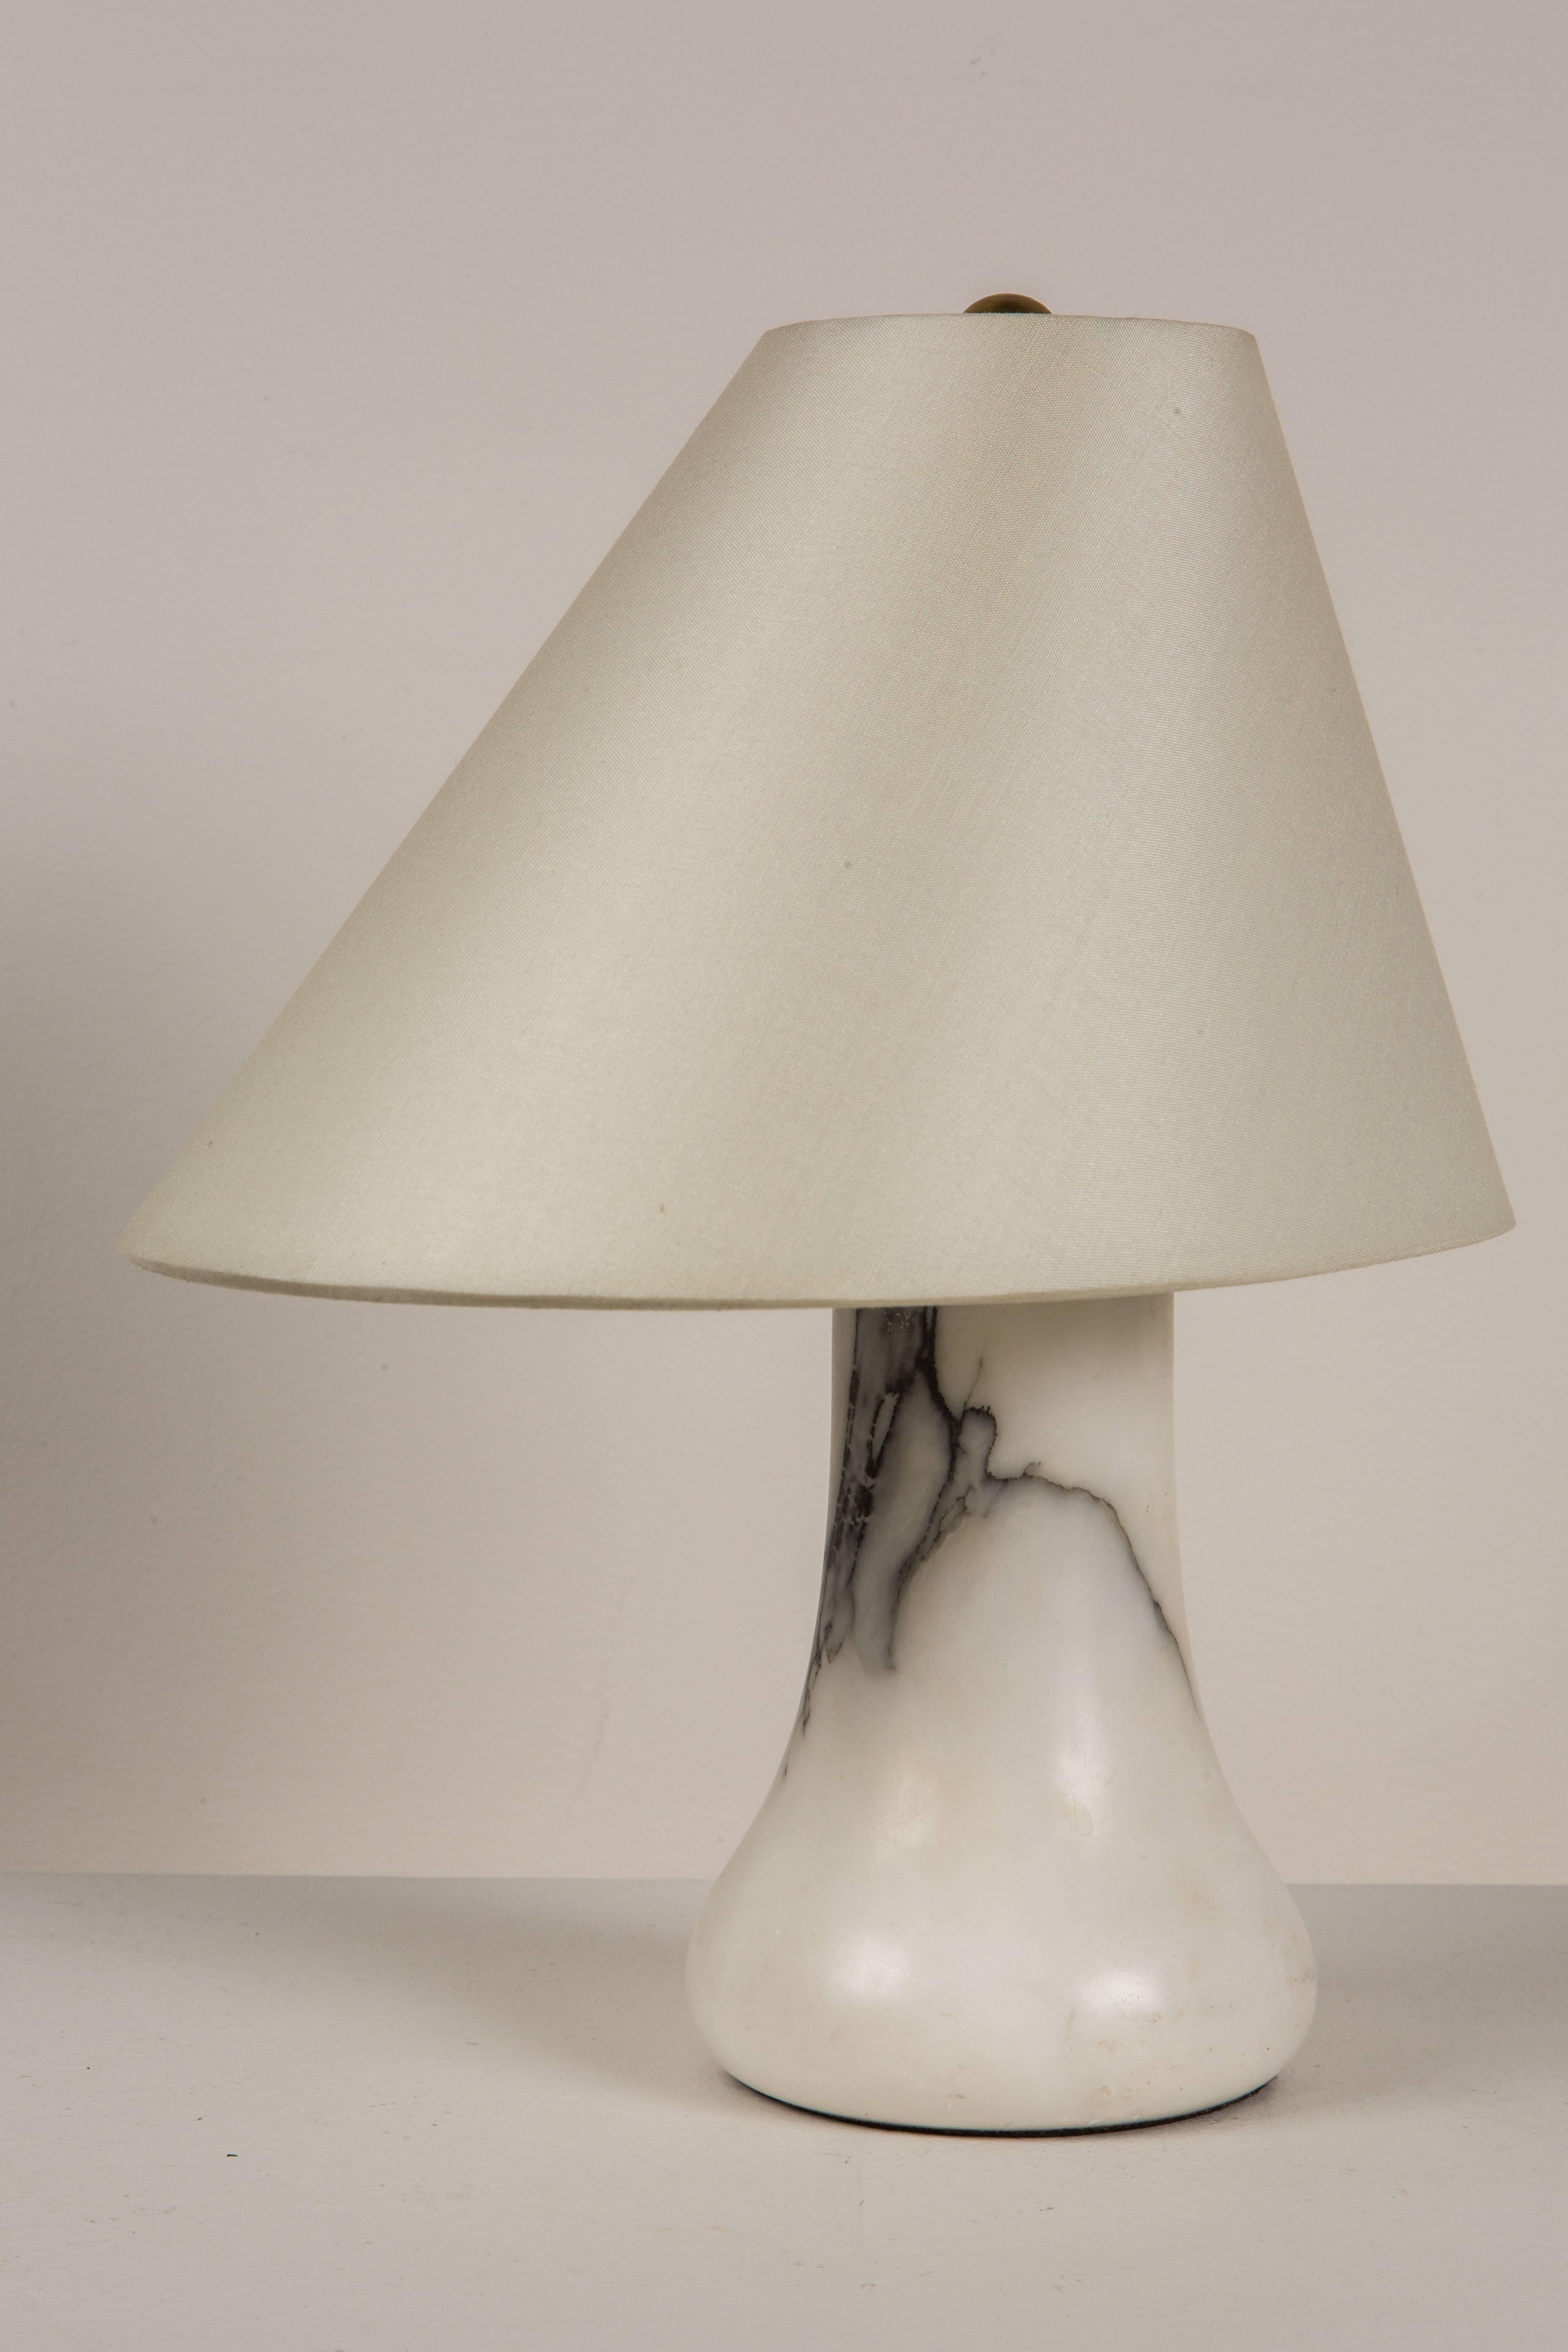 Mid-20th Century American Table Lamp